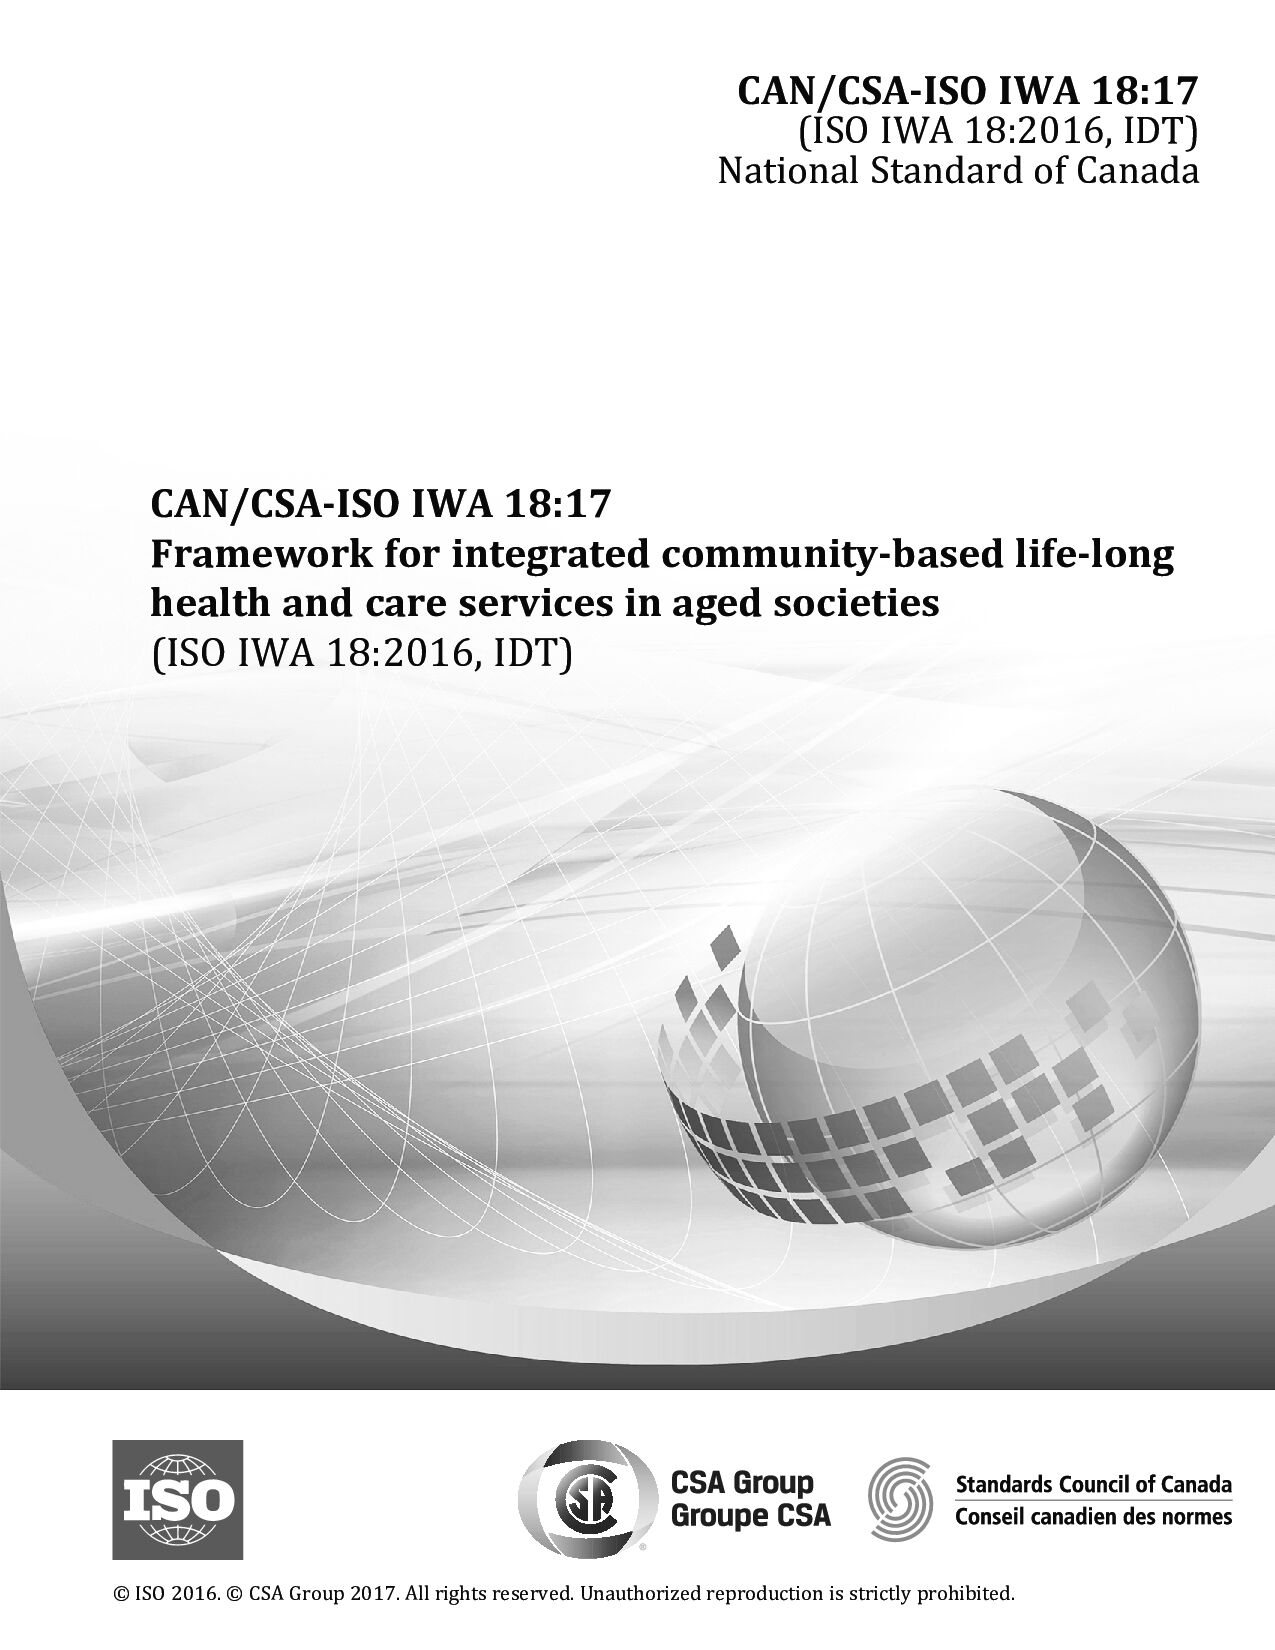 CAN/CSA-ISO IWA 18:2017